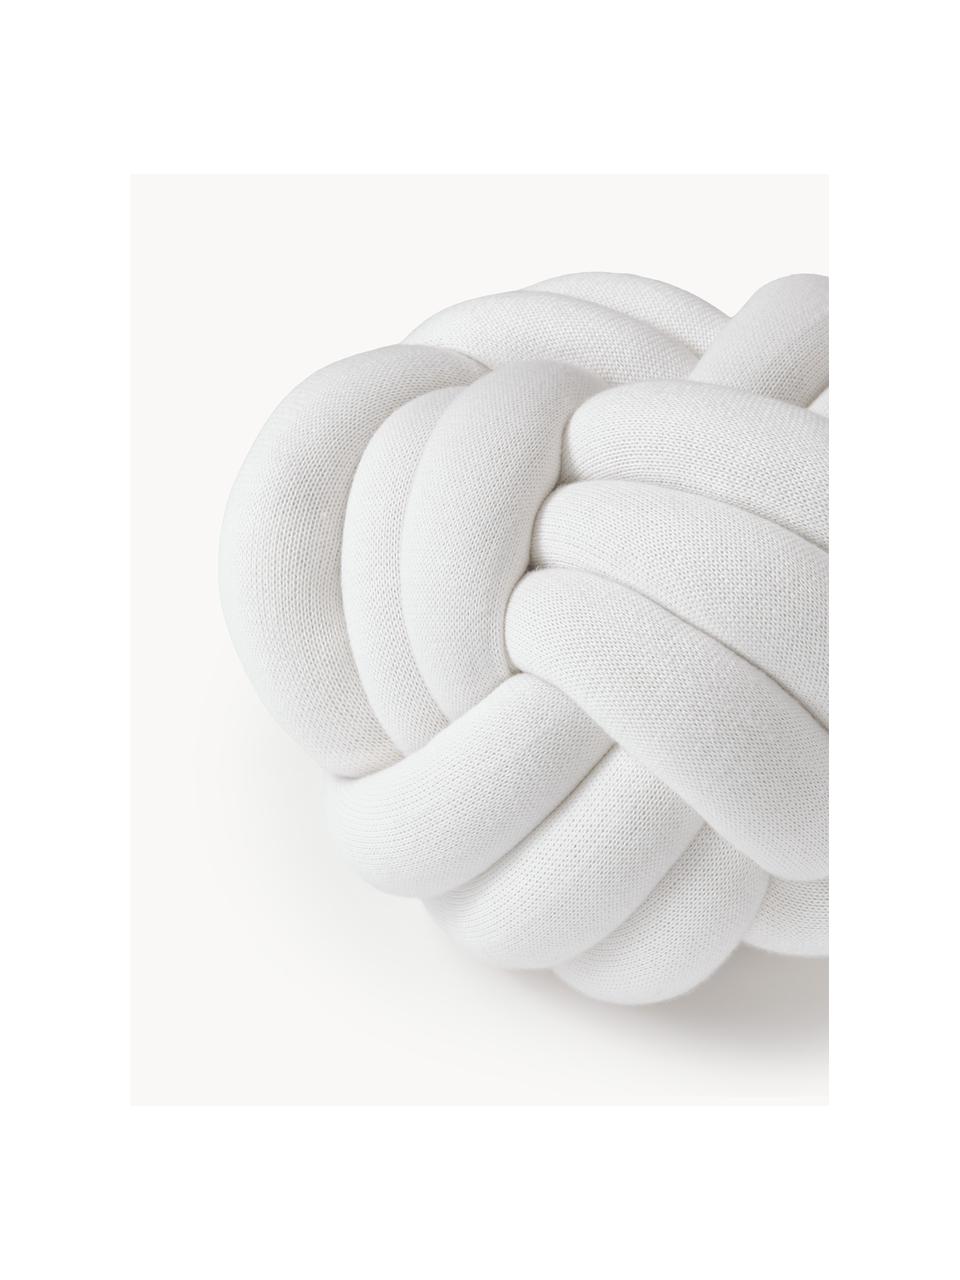 Knoten-Kissen Twist, Off White, B 30 x L 30 cm